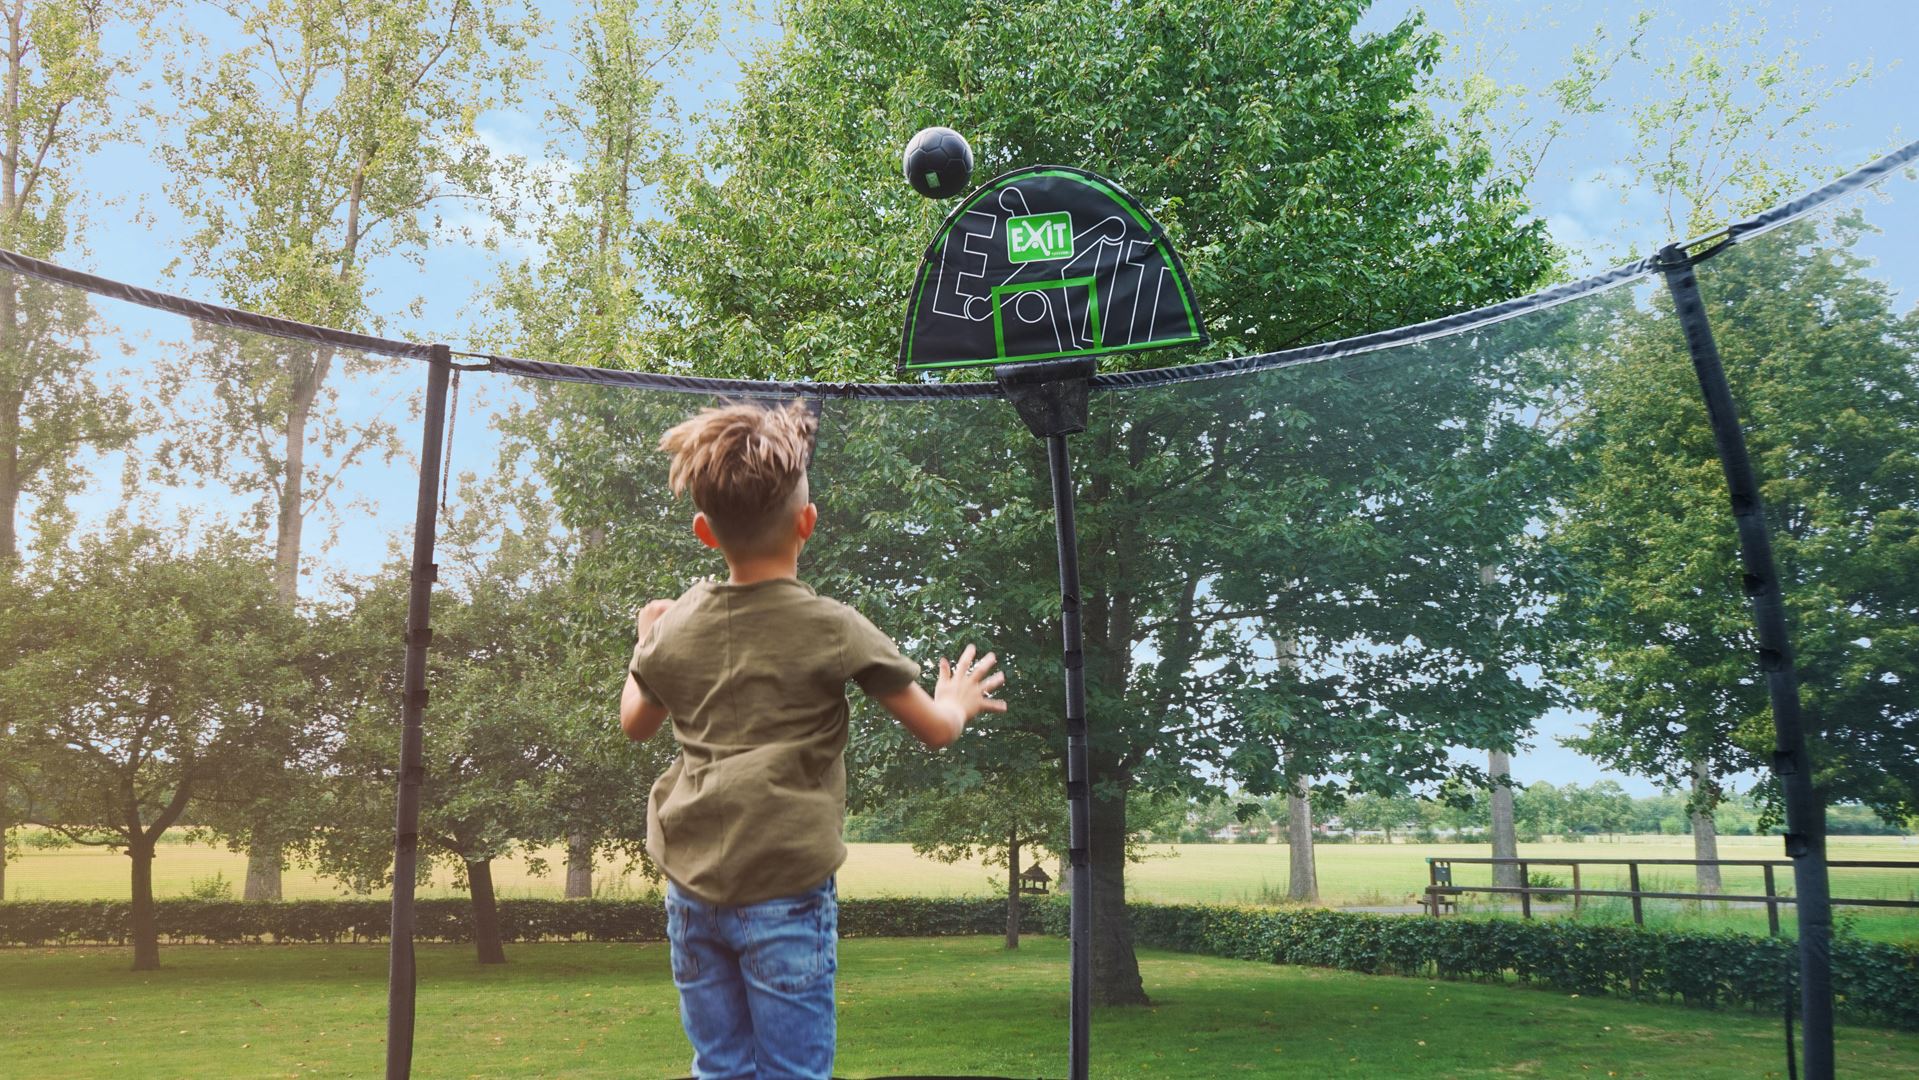 EXIT-trampoline-basket-25-38mm-groen-zwart